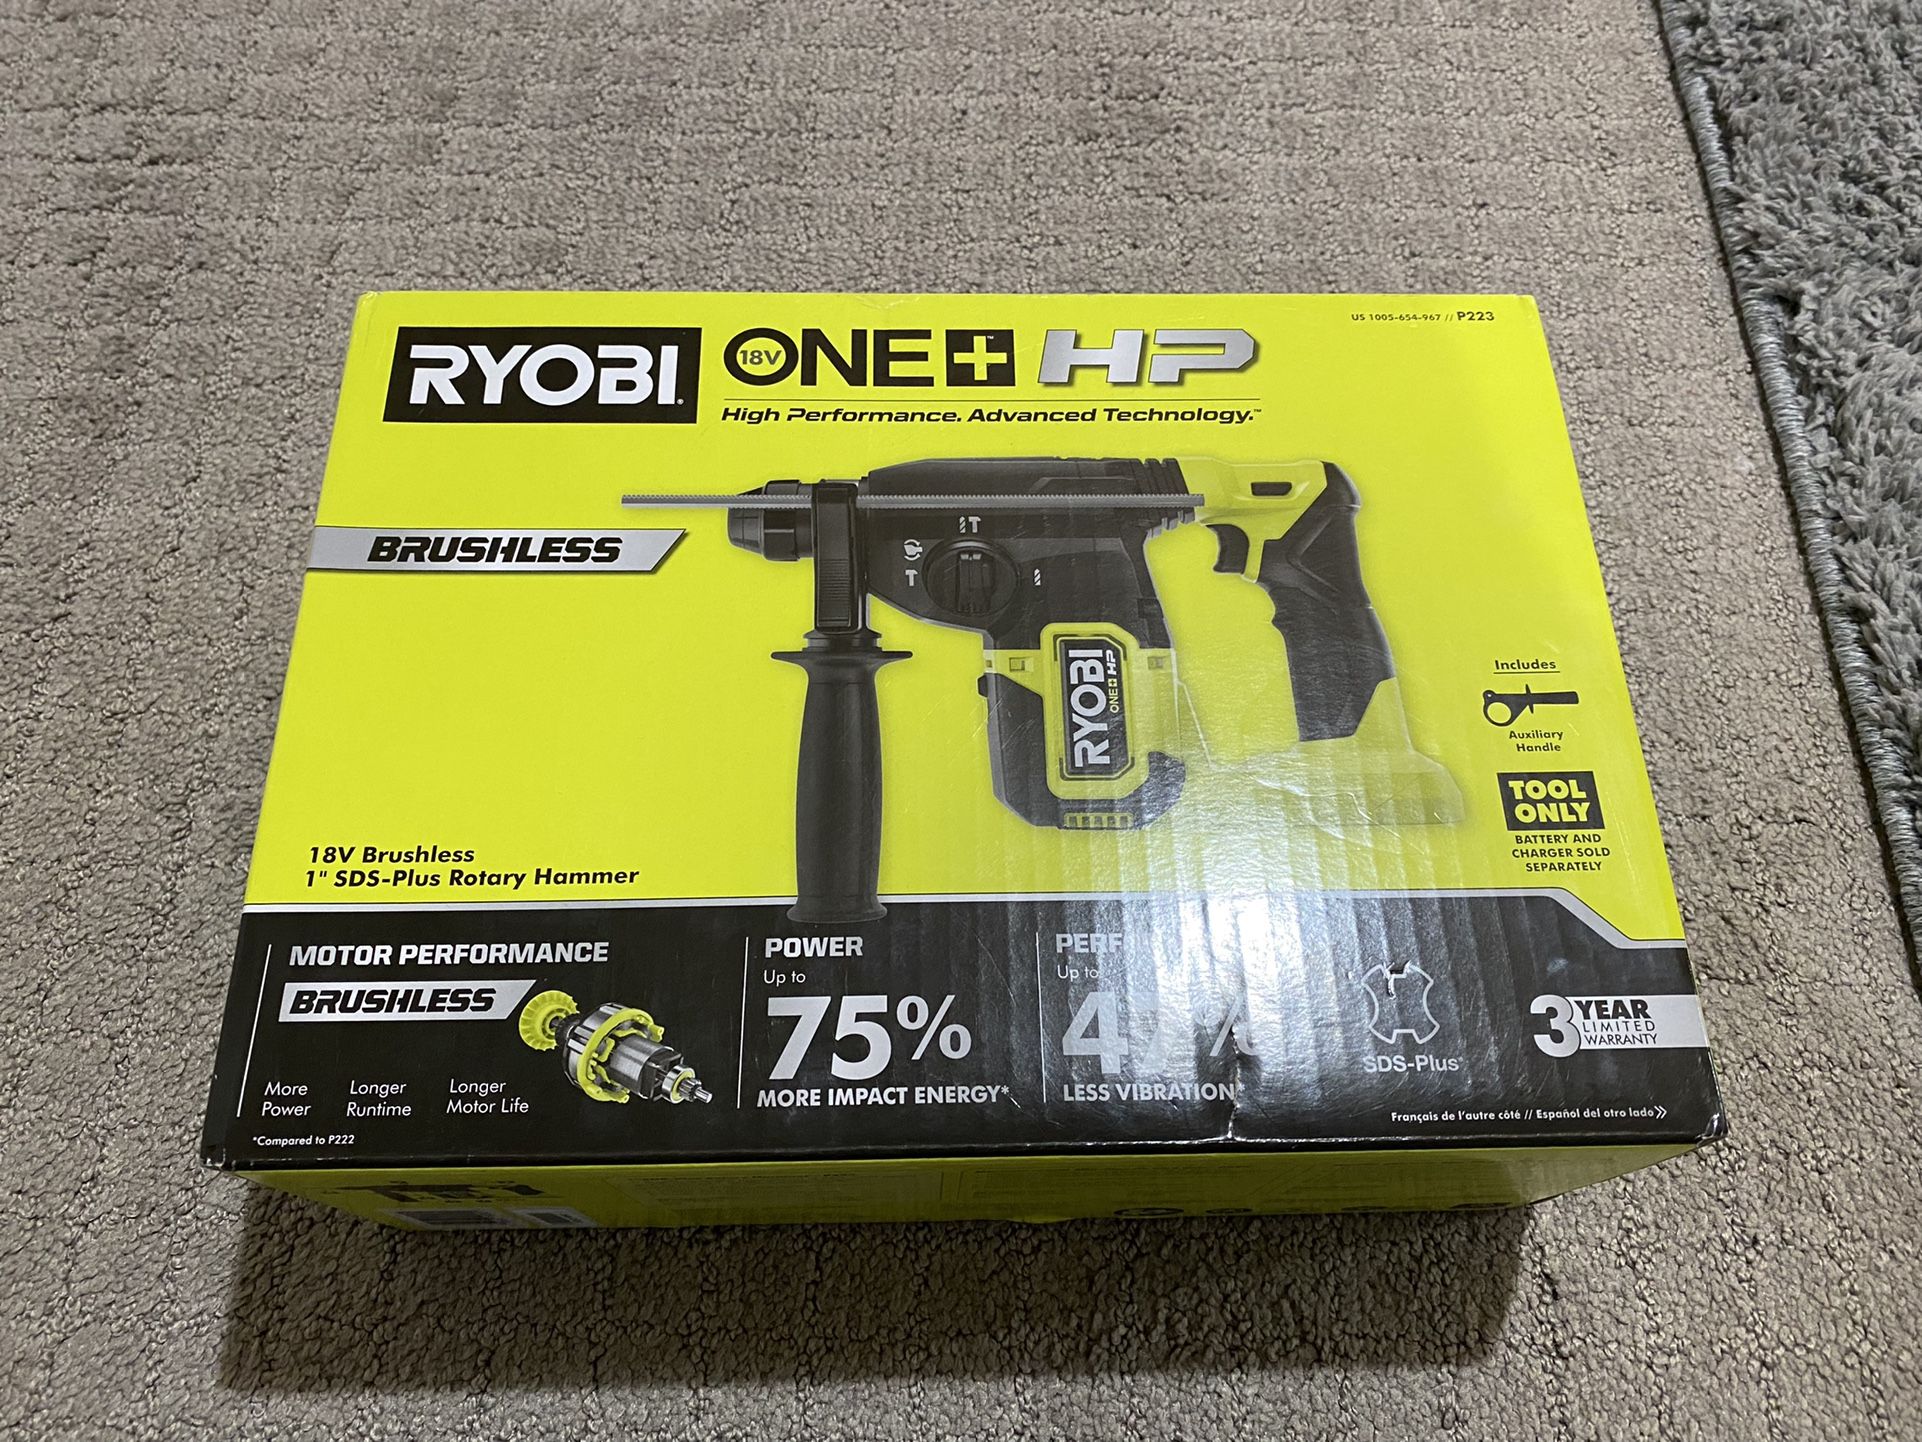 Ryobi One+ Hp Hammer Drill